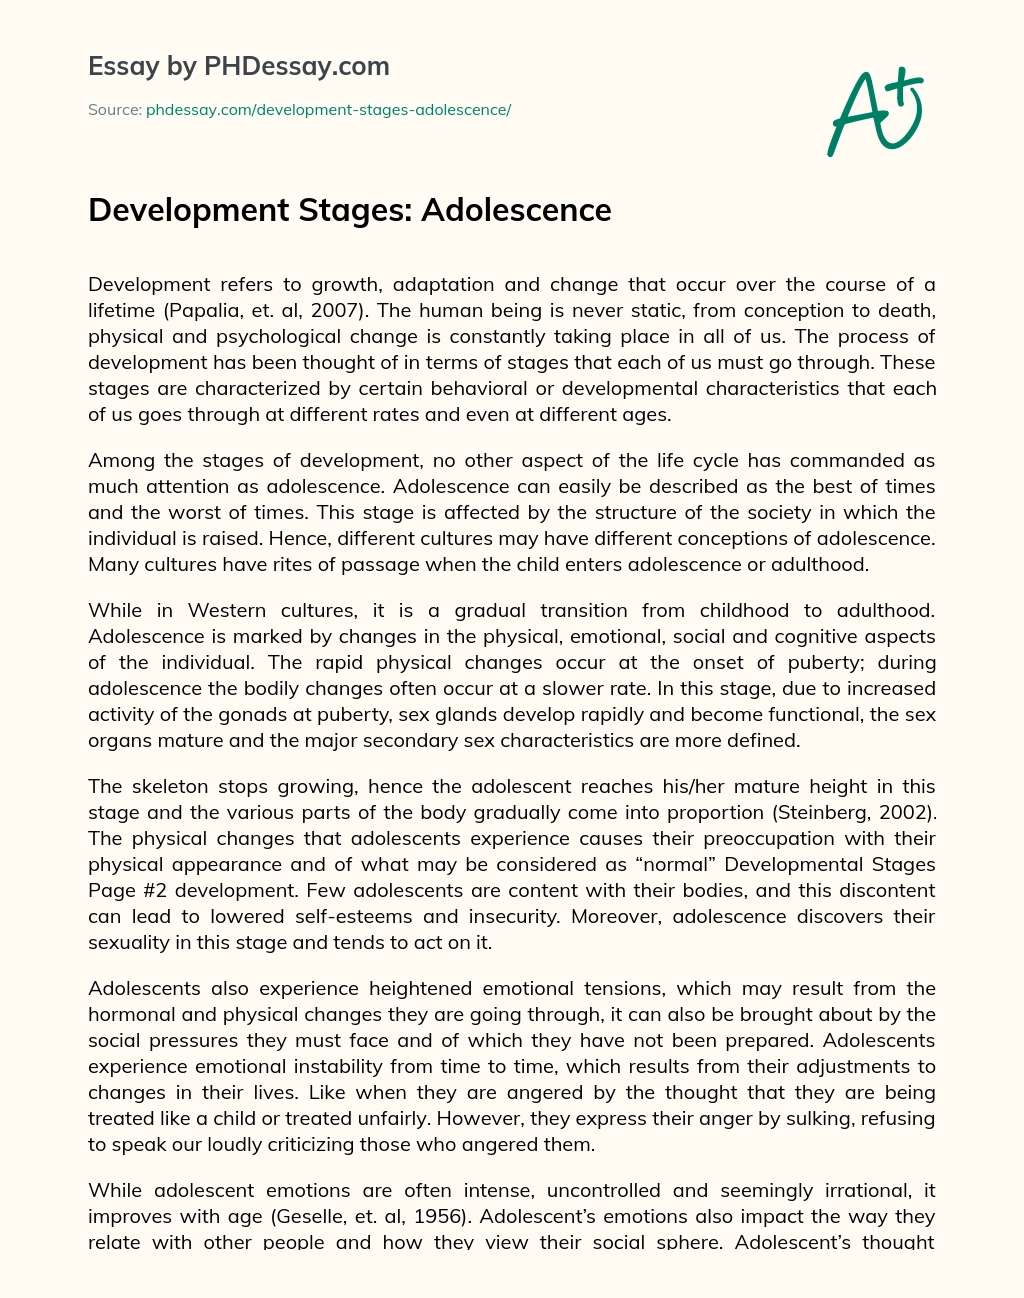 Development Stages: Adolescence essay